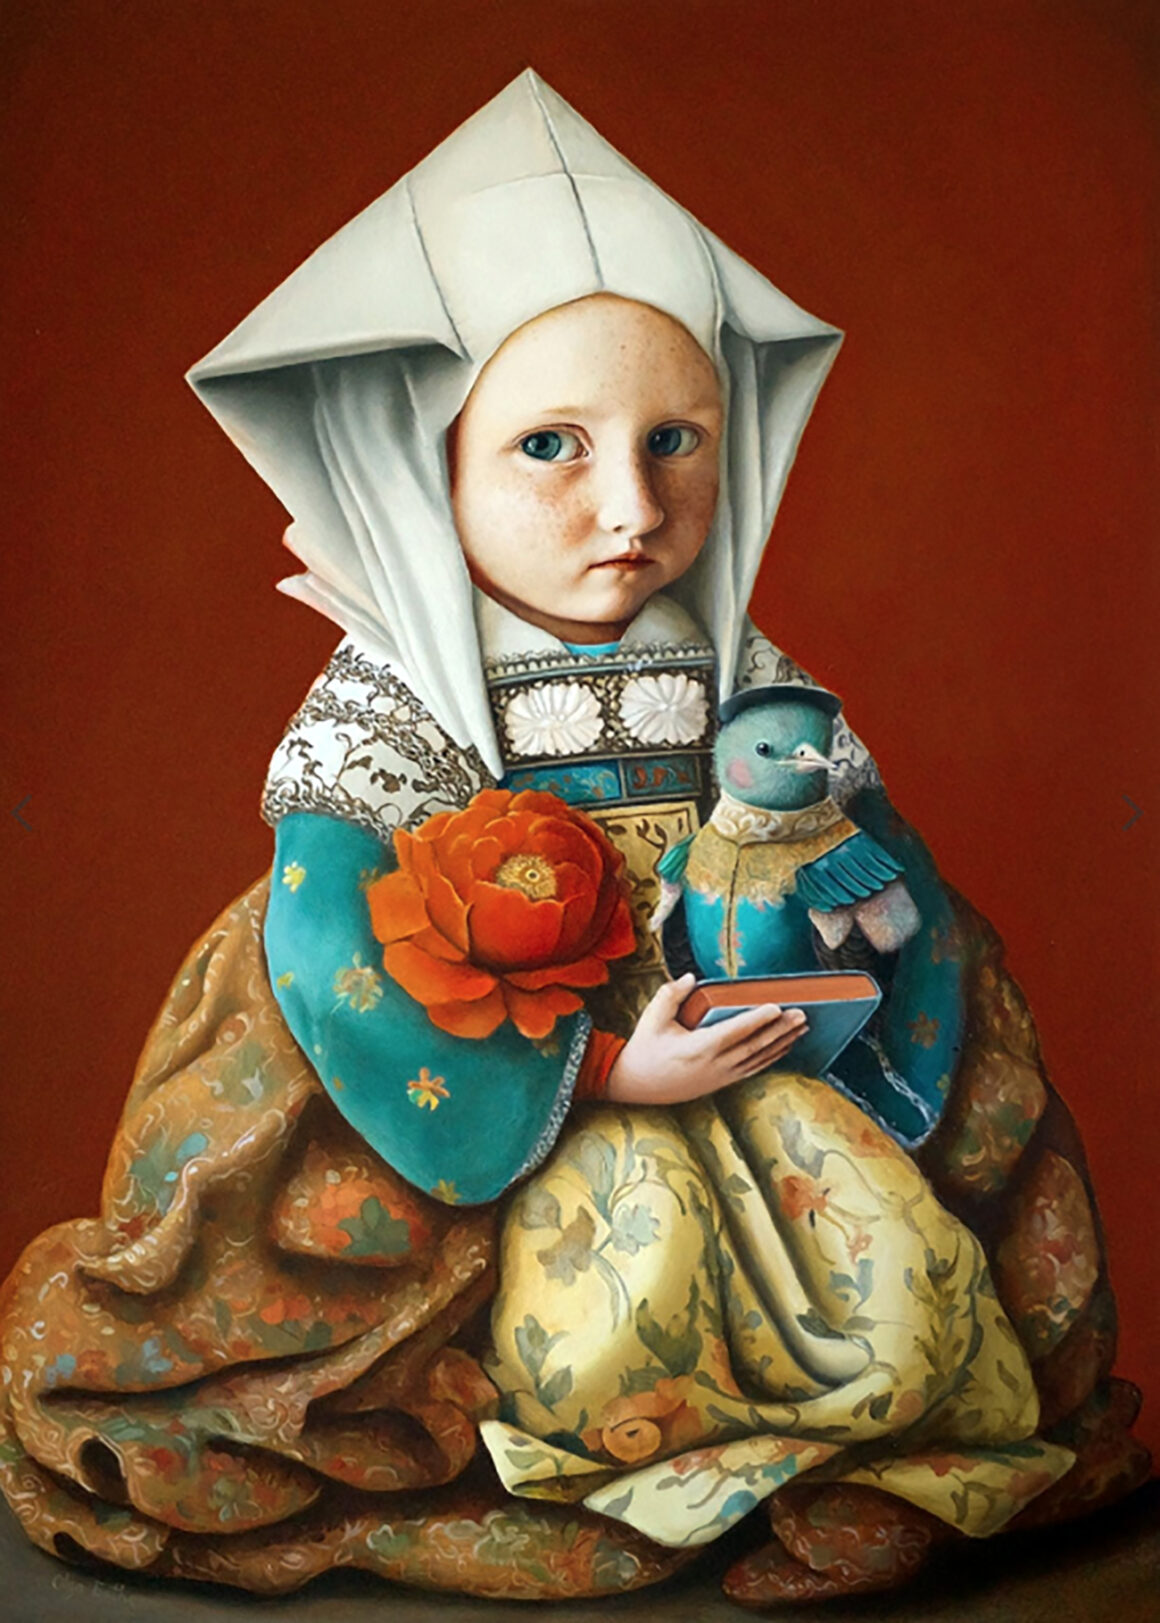 Portrait by Olga Esther